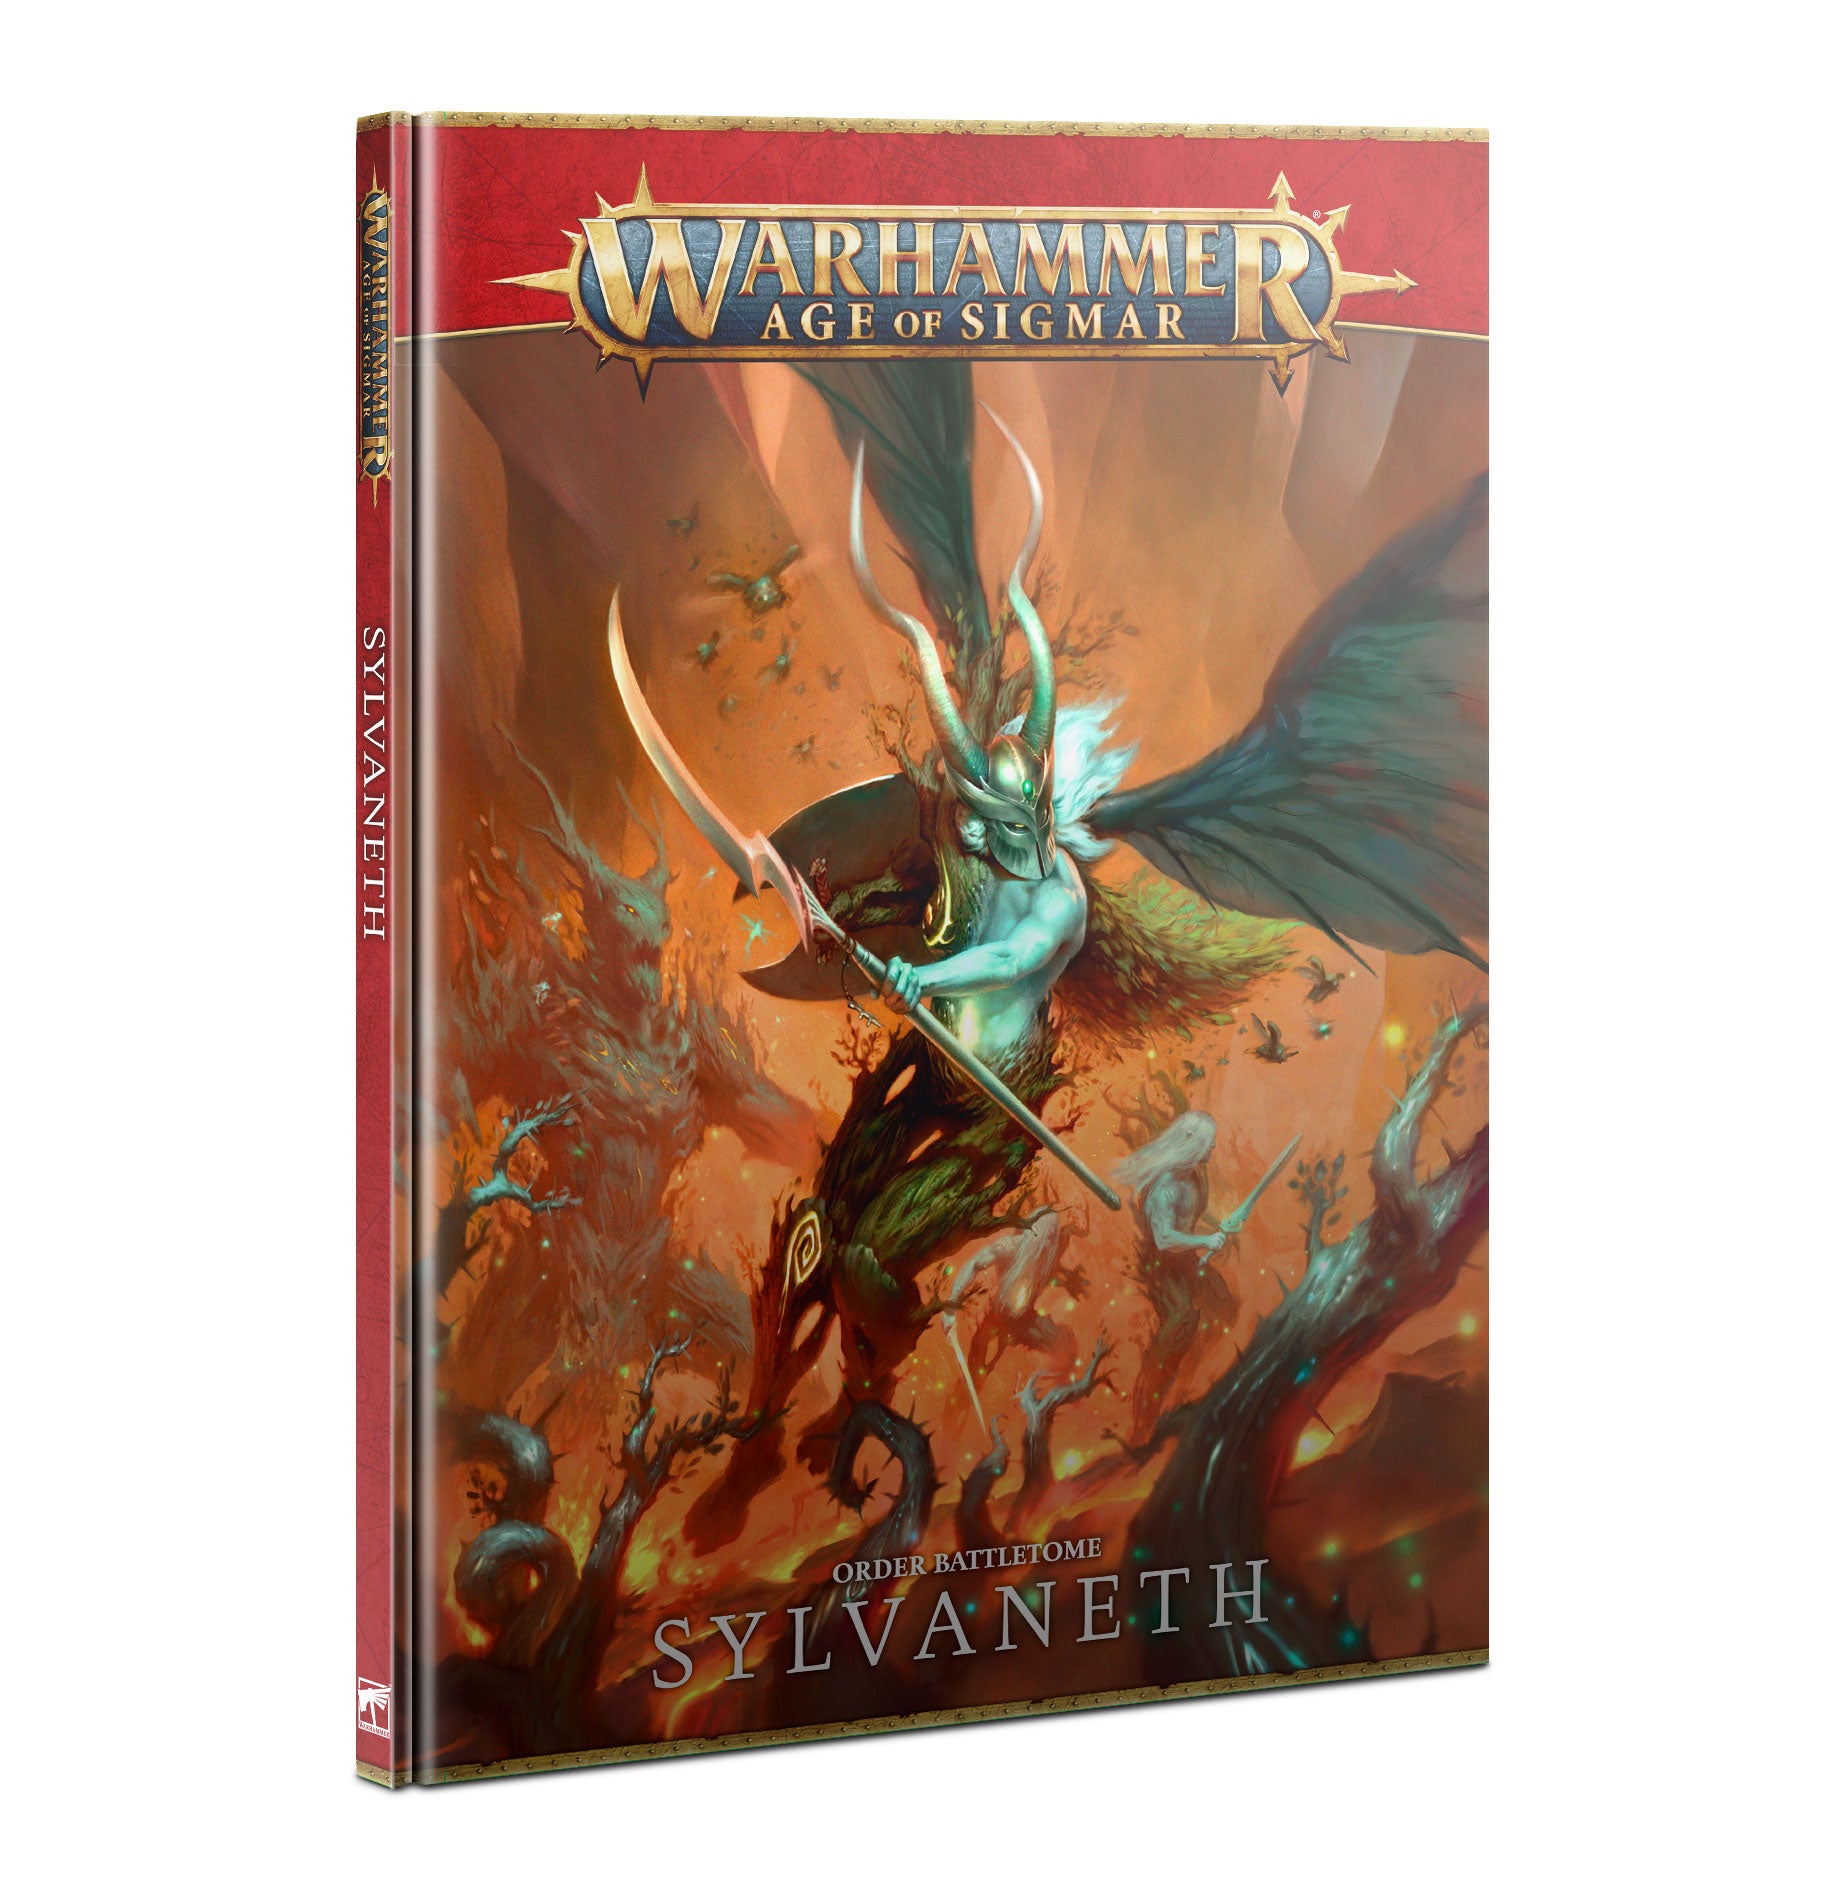 Warhammer Age of Sigmar Order Battletome: Sylvaneth